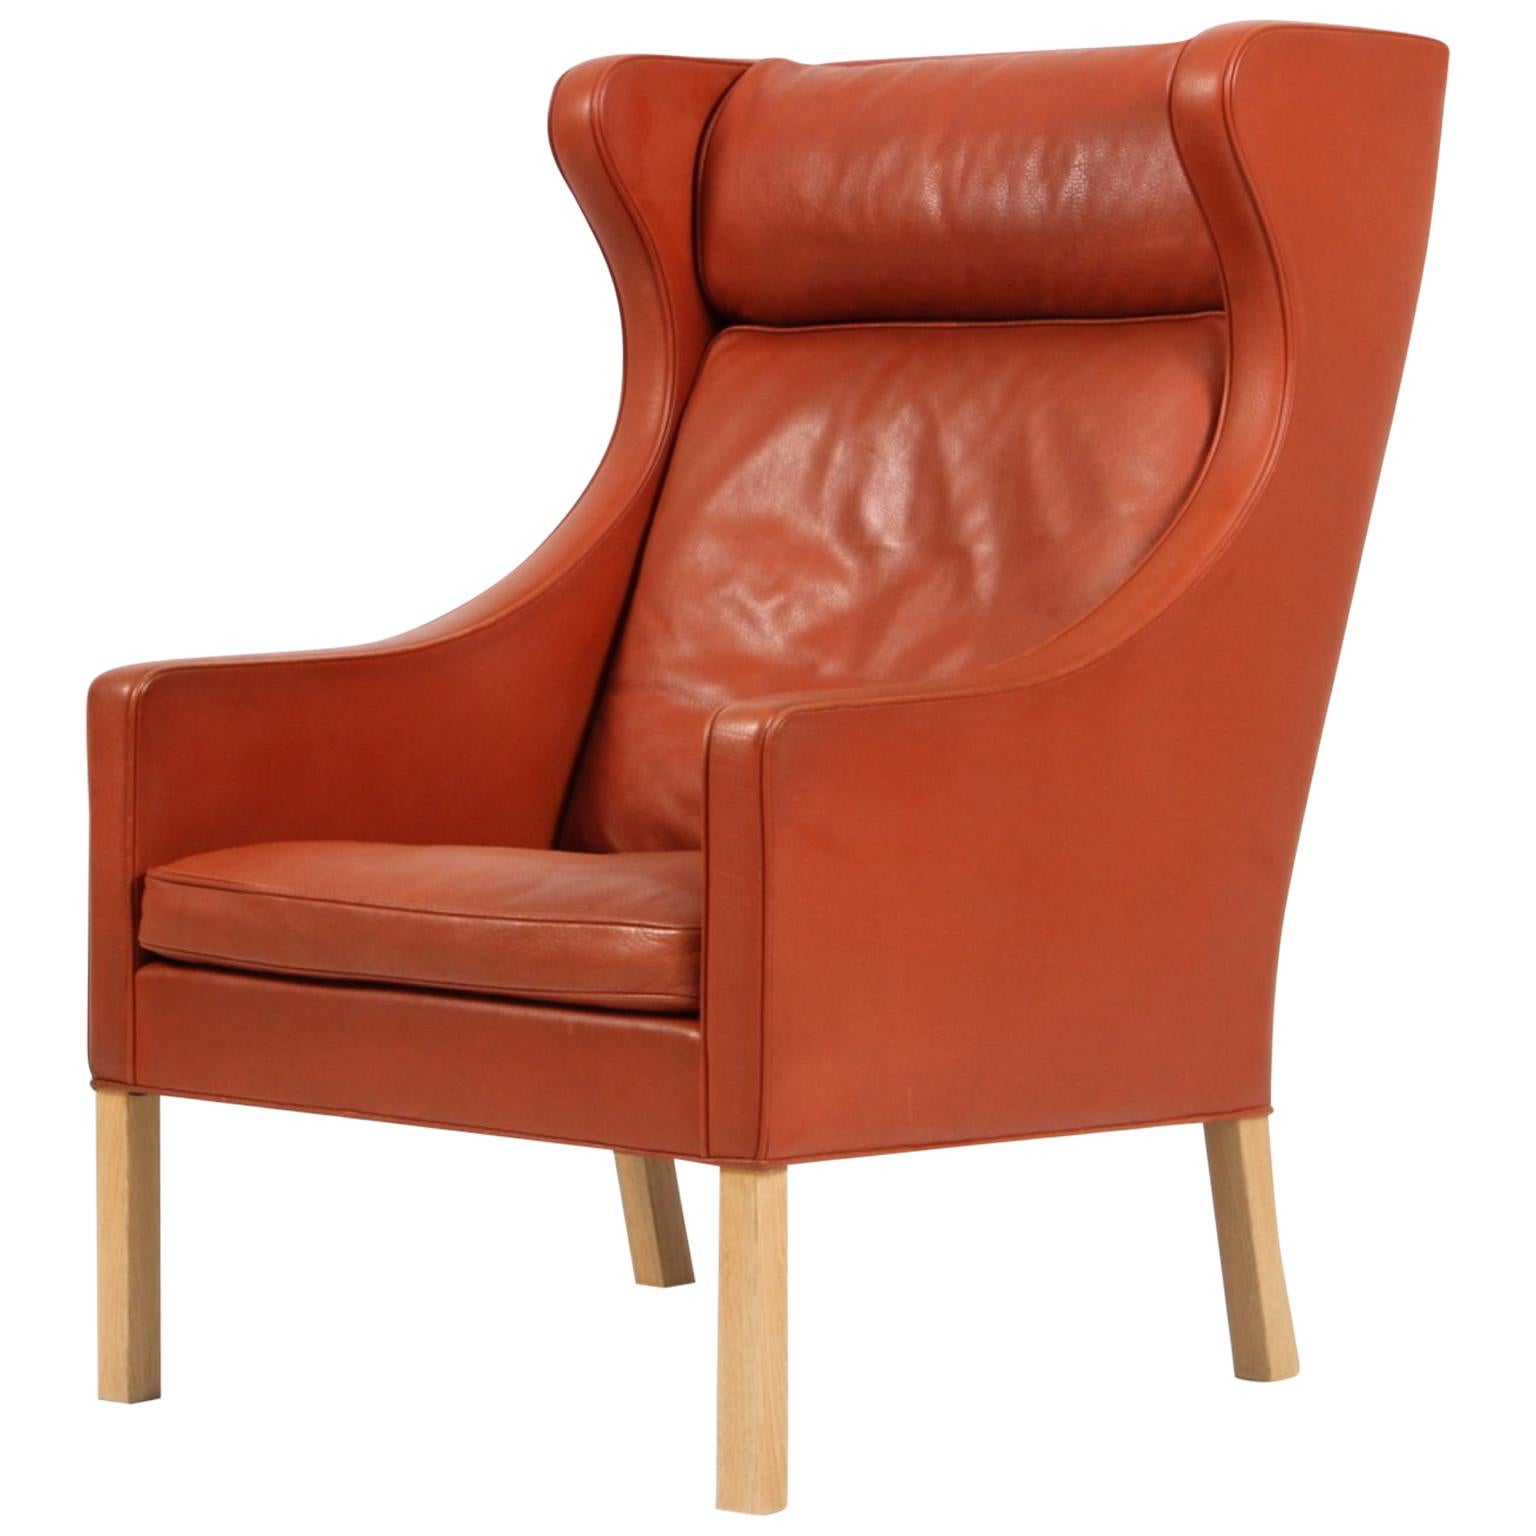 Børge Mogensen Wing Back Chair in Original cognac leather, Model 2204